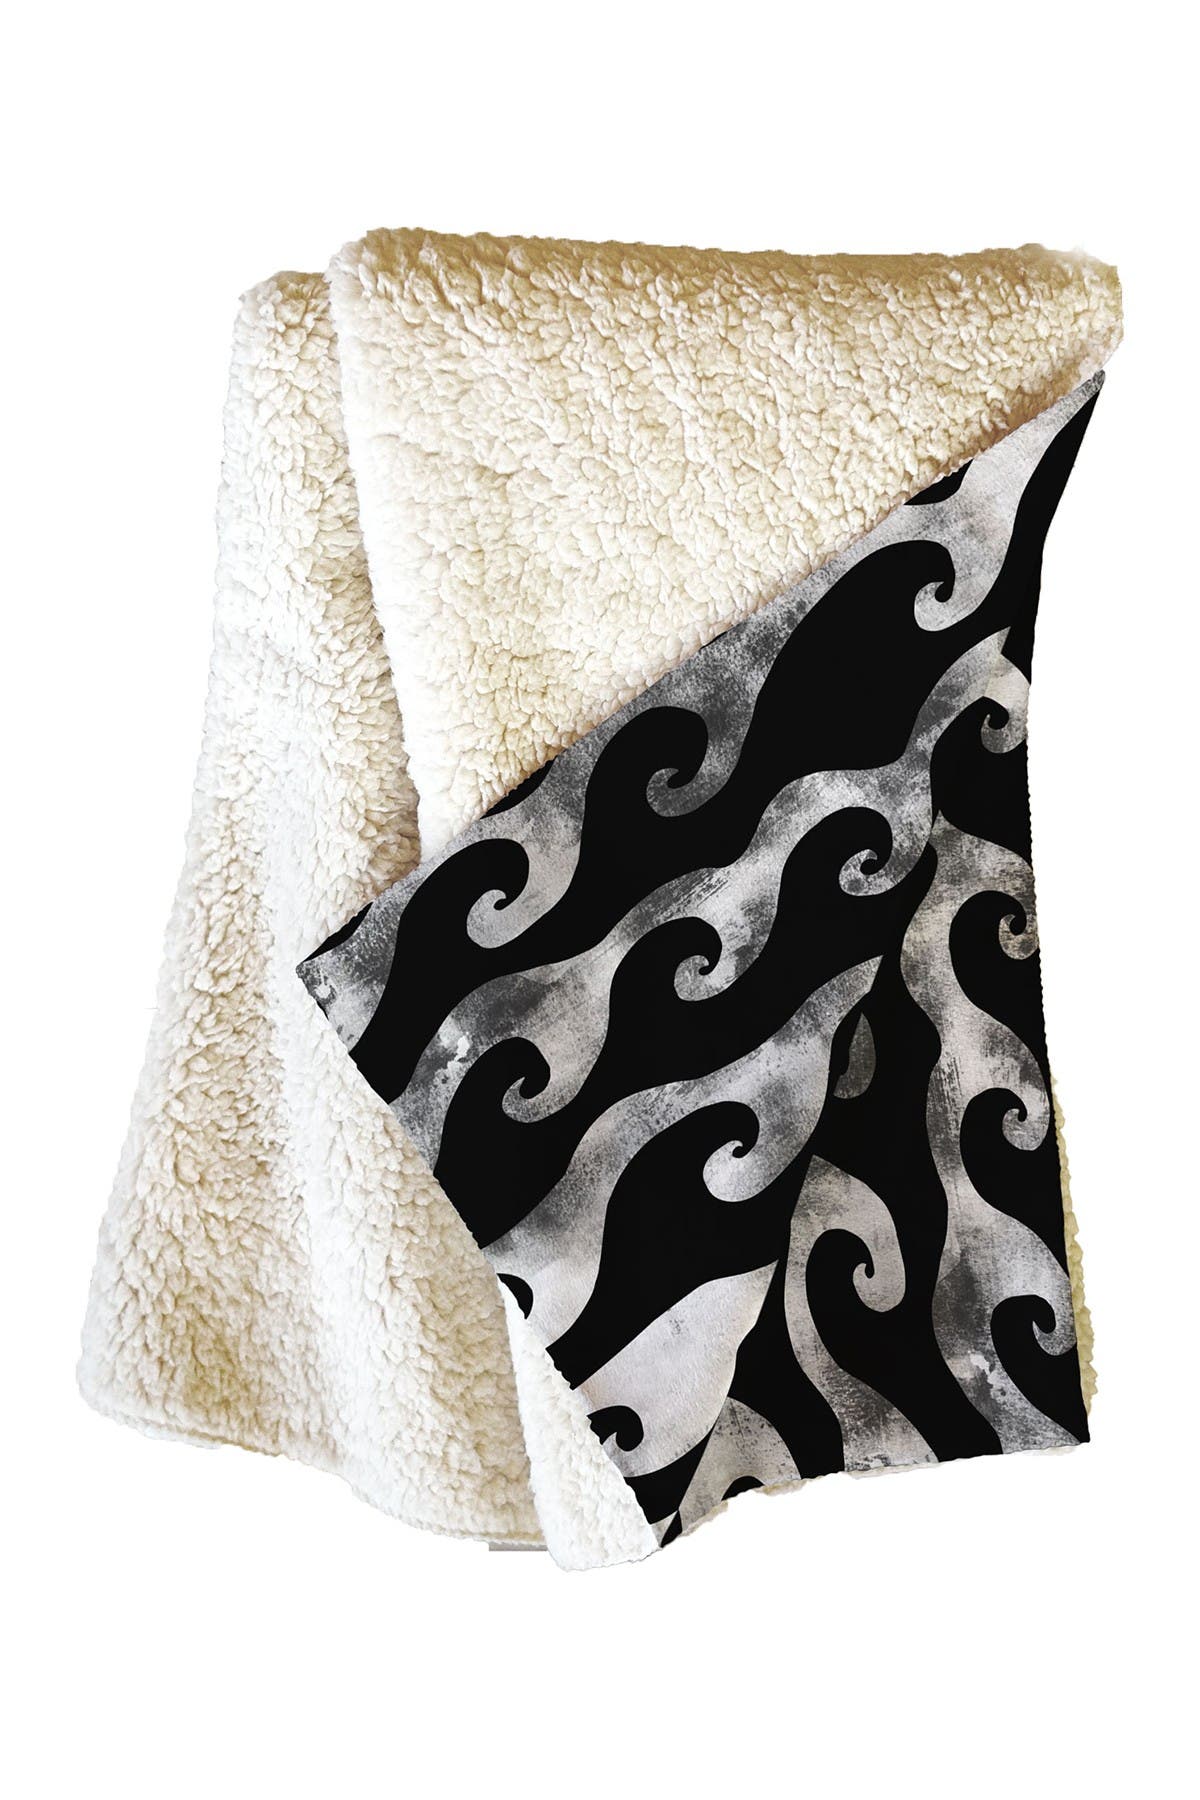 Deny Designs Schatzi Brown Swell Black And White Fleece Throw Blanket Nordstrom Rack